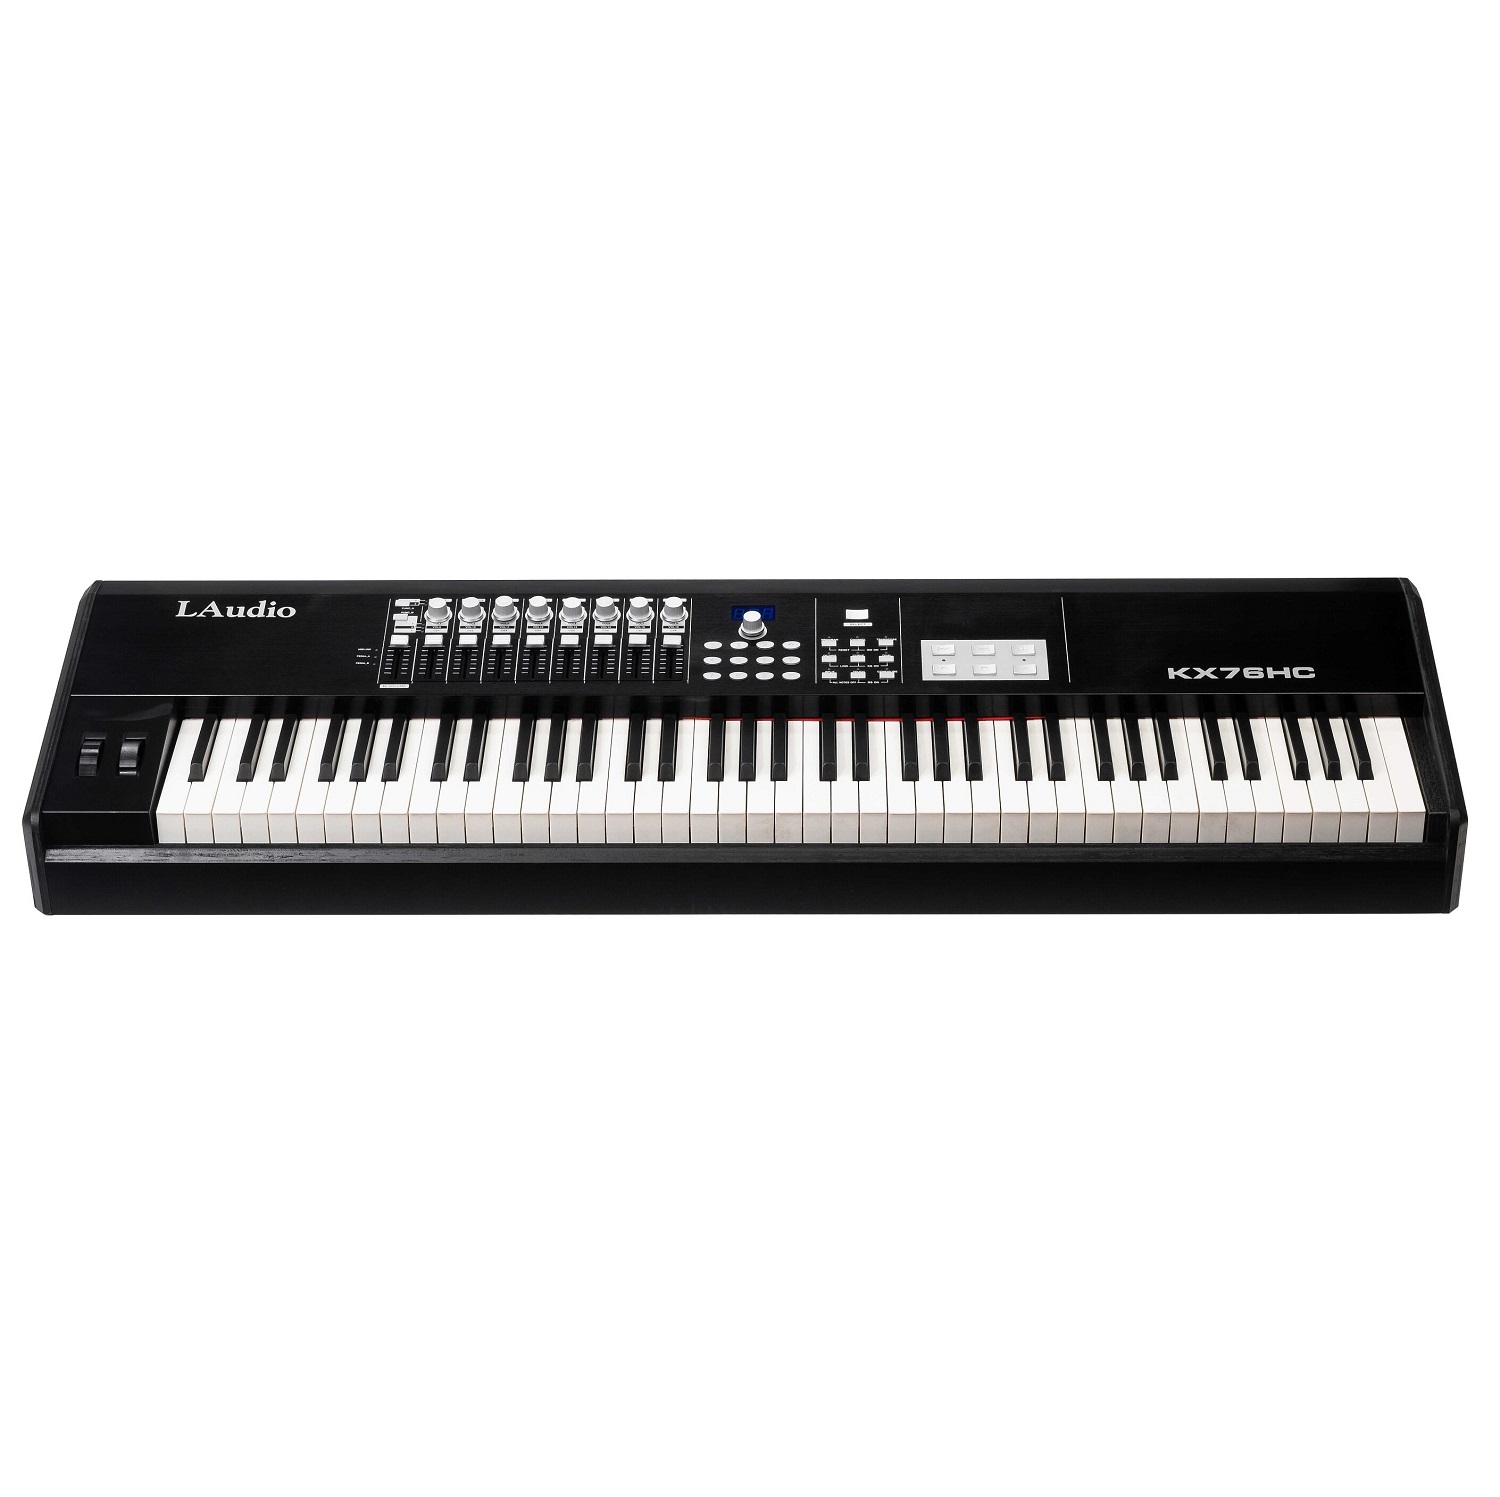 MIDI клавиатуры L Audio KX76HC midi клавиатуры l audio pandaminic